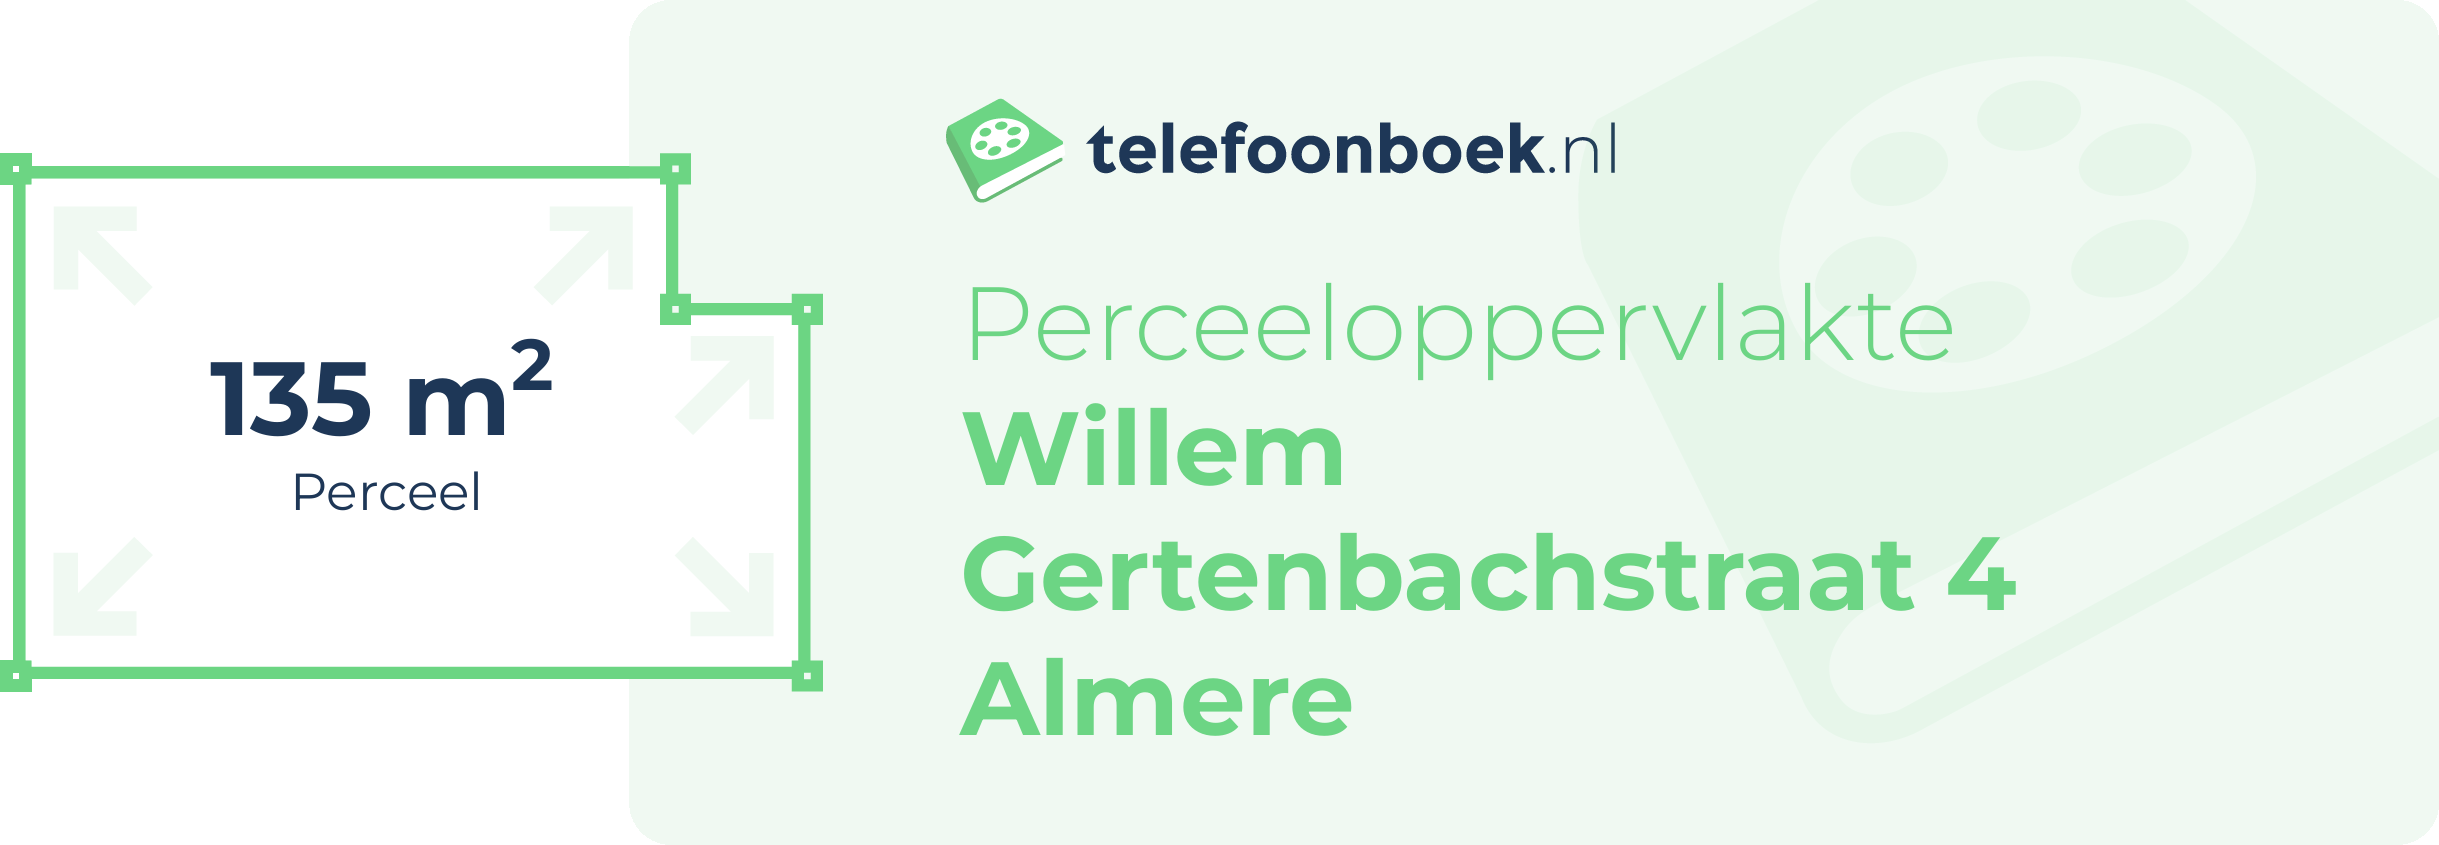 Perceeloppervlakte Willem Gertenbachstraat 4 Almere